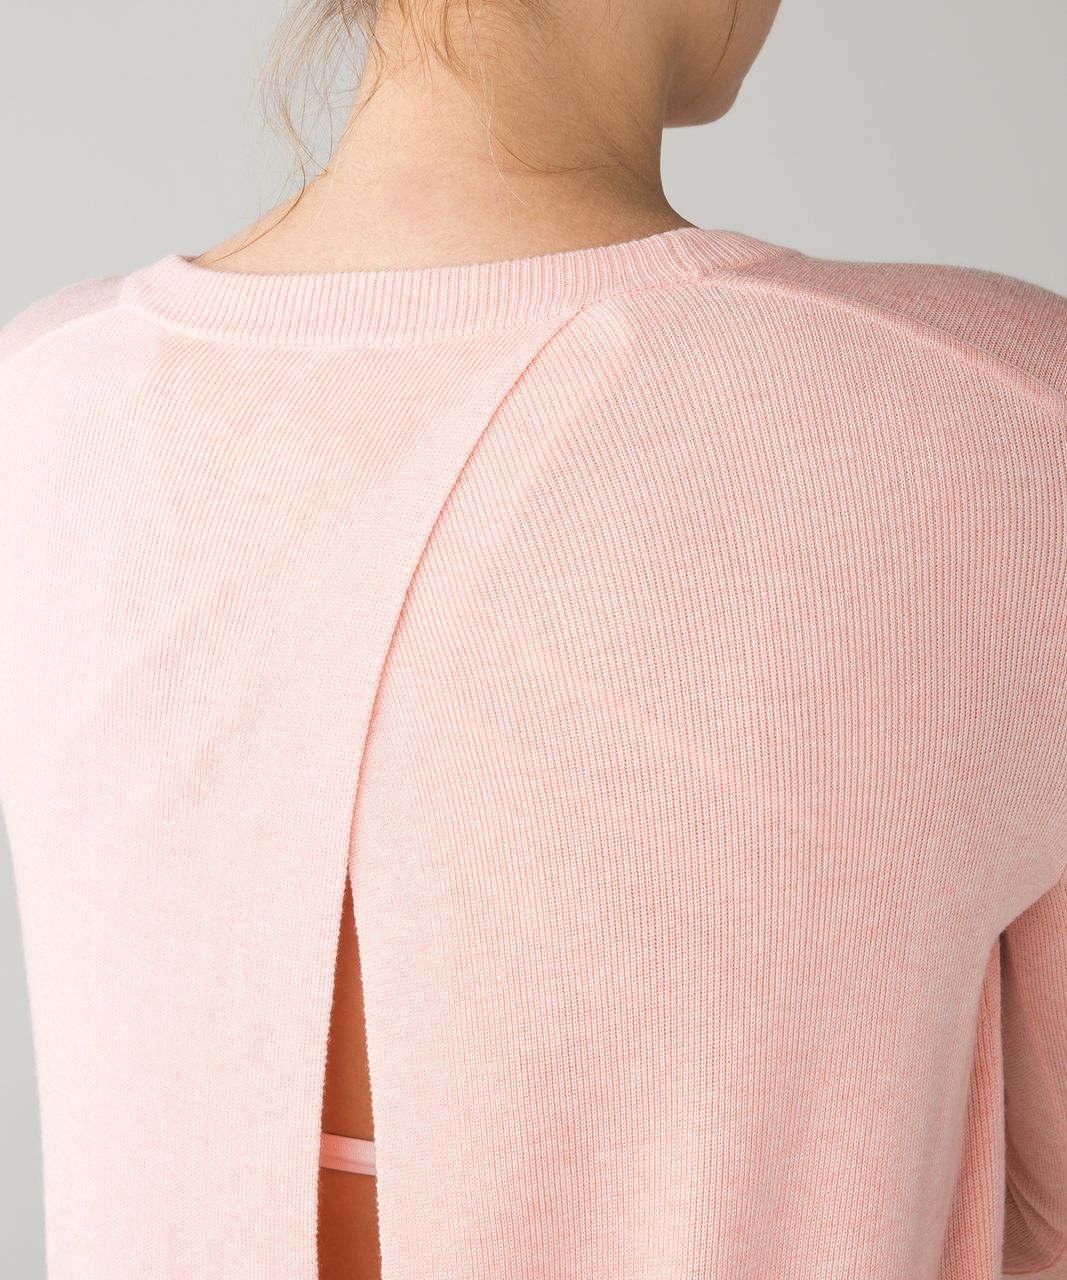 Lululemon Bring It Backbend Sweater - Heathered Minty Pink